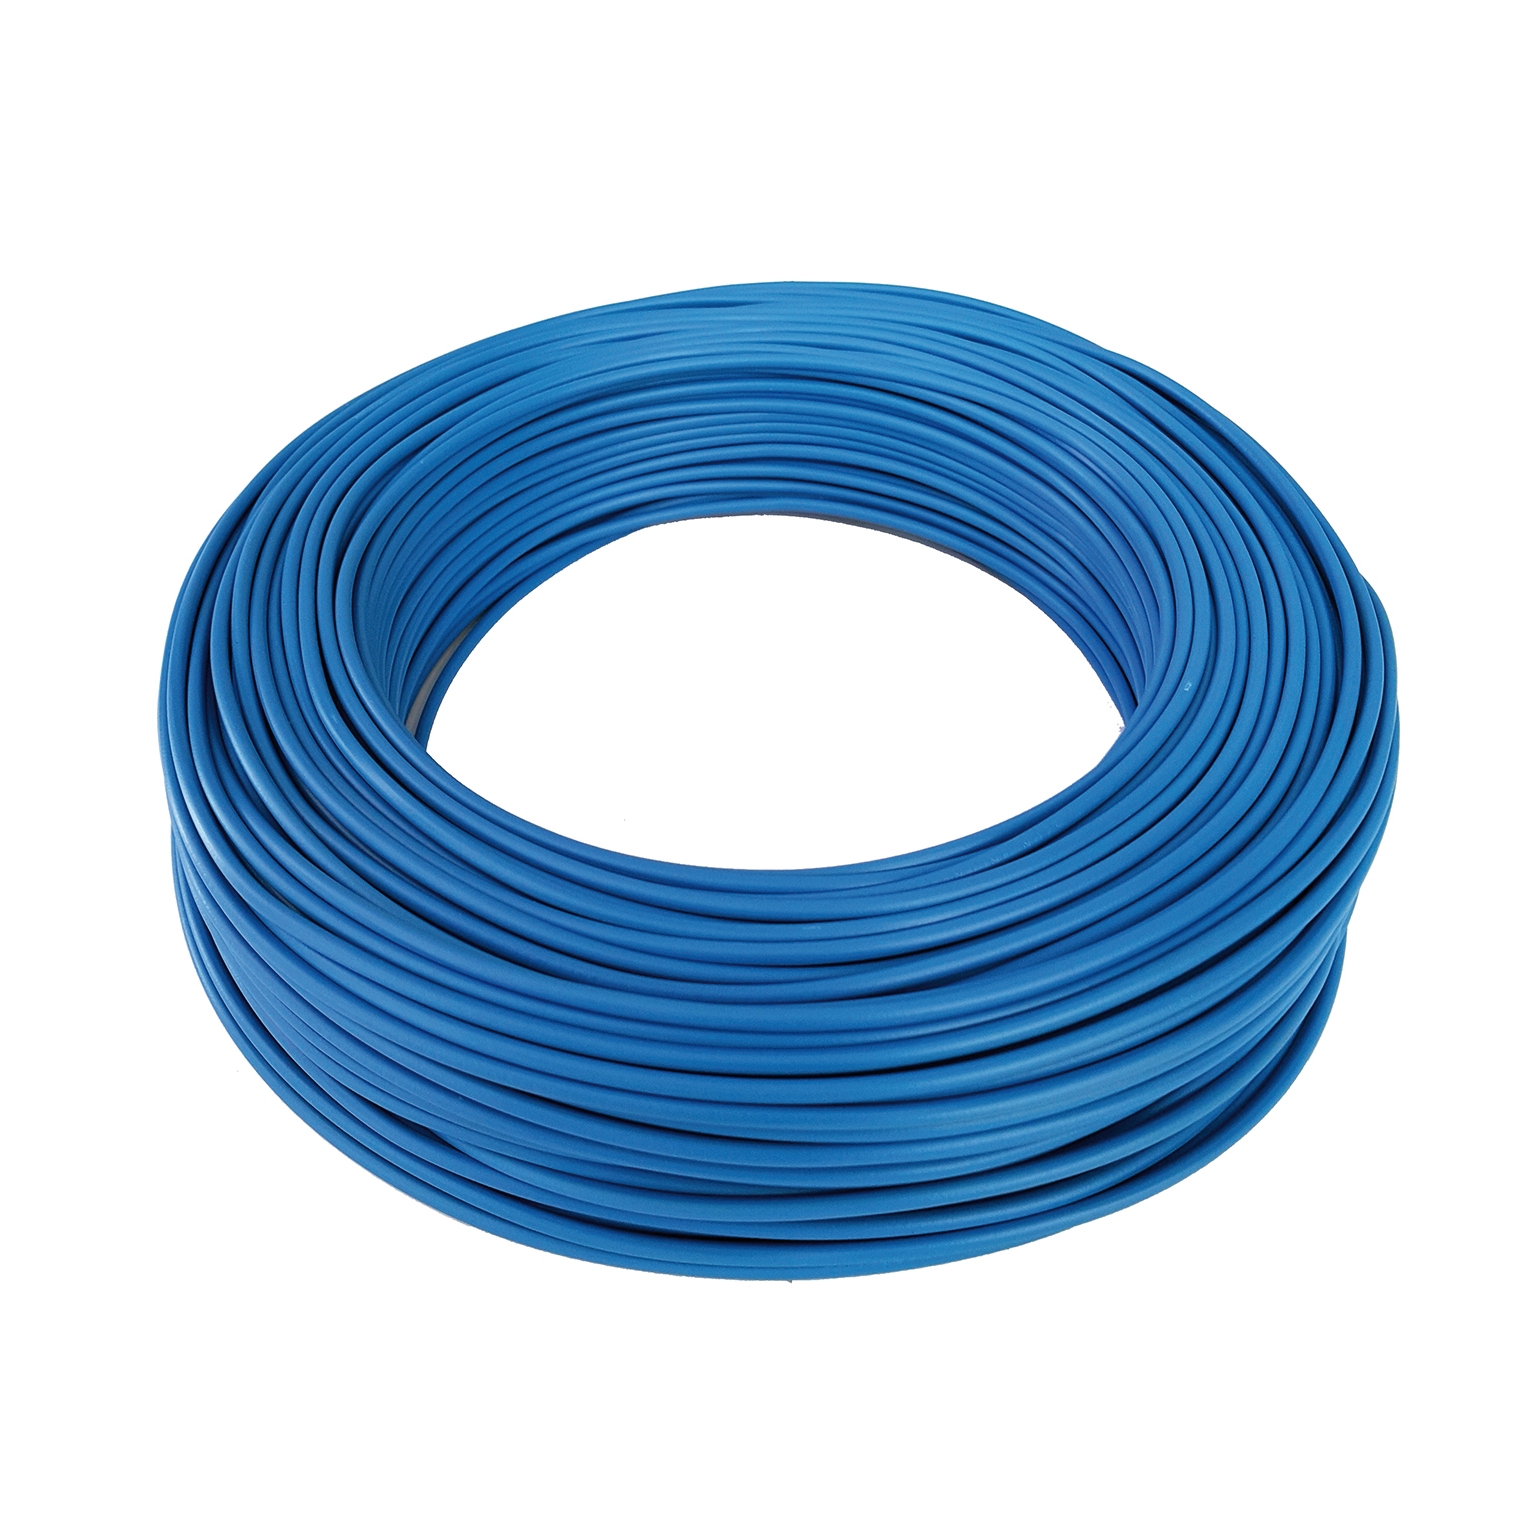 Cavo elettrico blu FS17 1 x 2,5 mm² 100 m BALDASSARI CAVI Matassa - 1